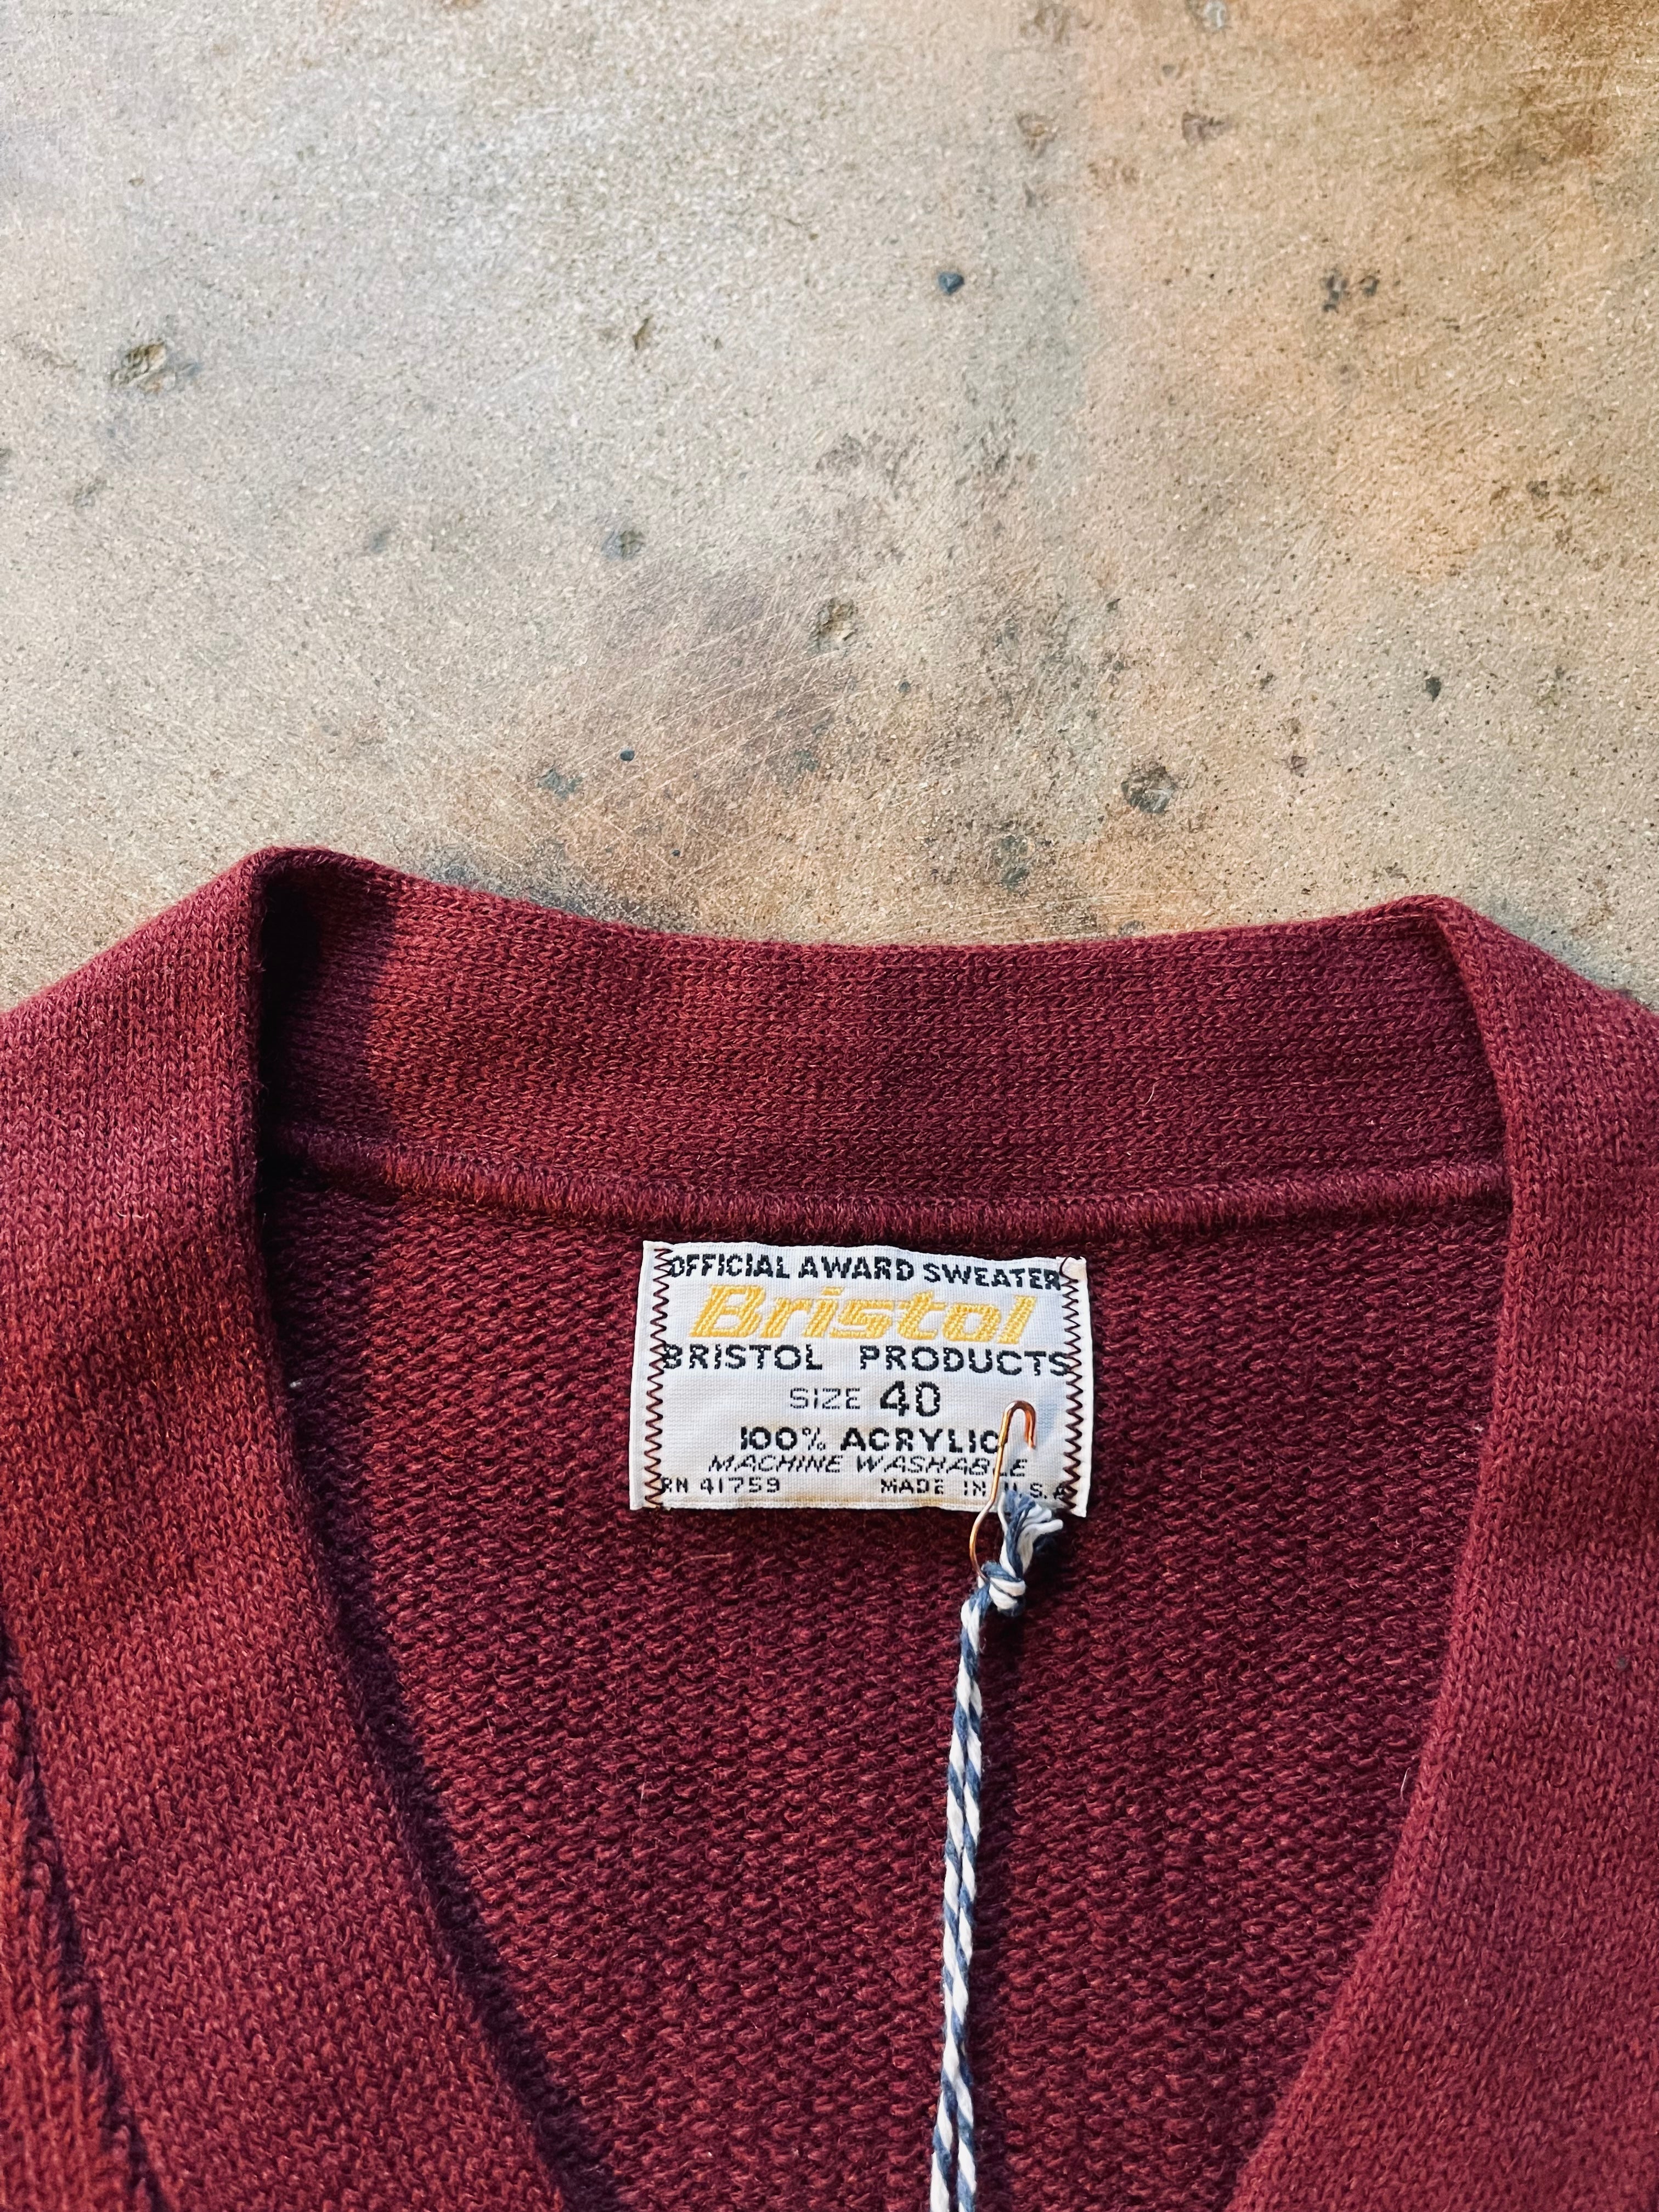 1988 Bristol Varsity V-Neck Sweater